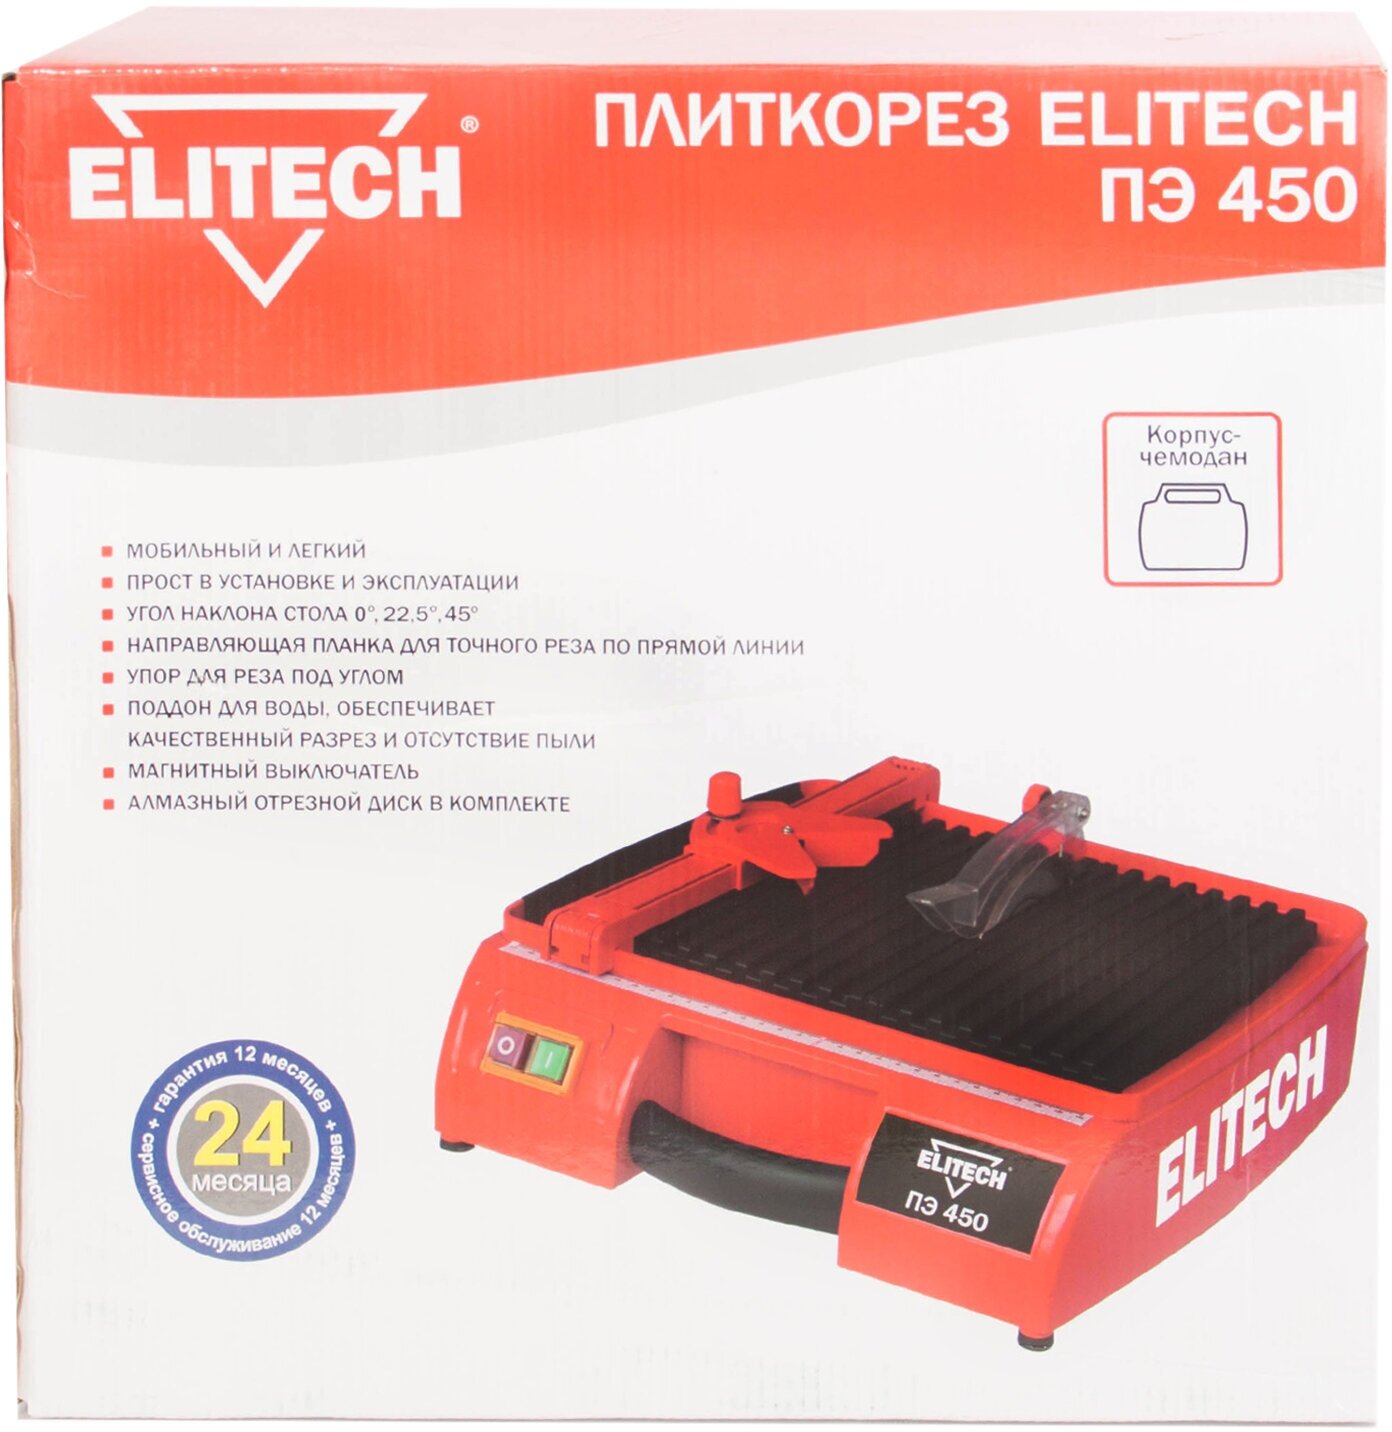 Электрический плиткорез Elitech ПЭ 450 - фото №20